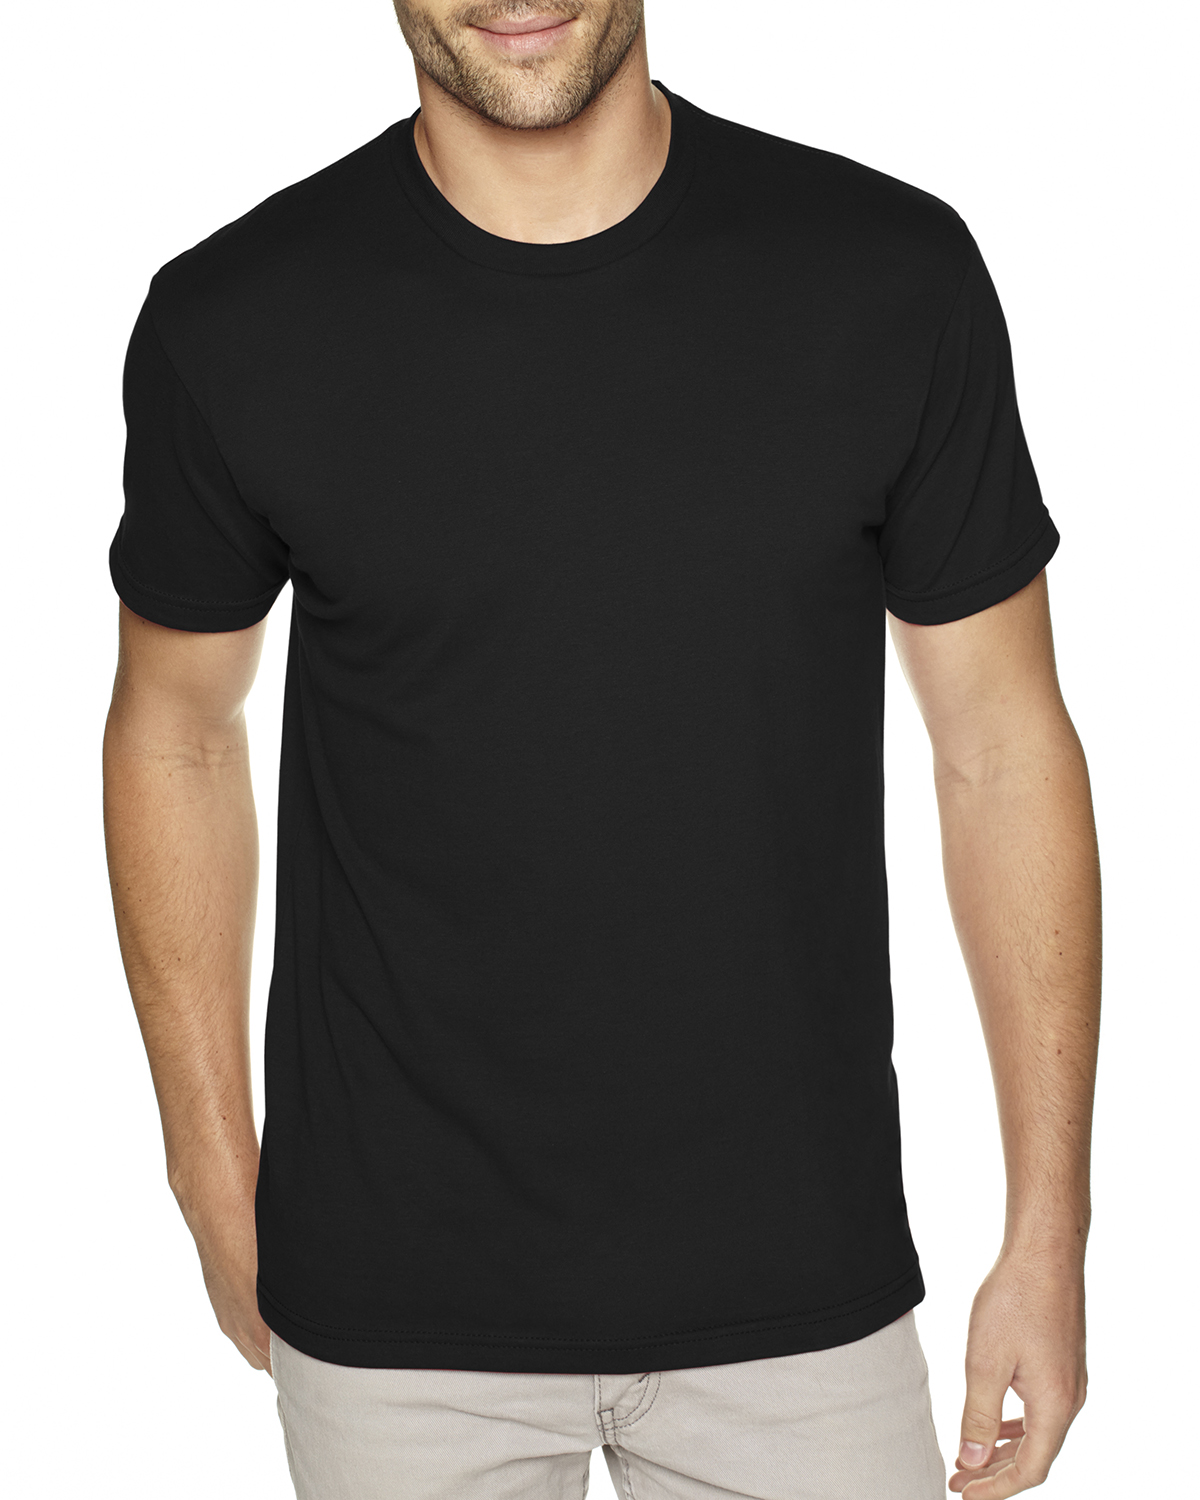 PIMD  Black Vented Mens Fitness Crew Neck Long Sleeve T-Shirt S M L XL